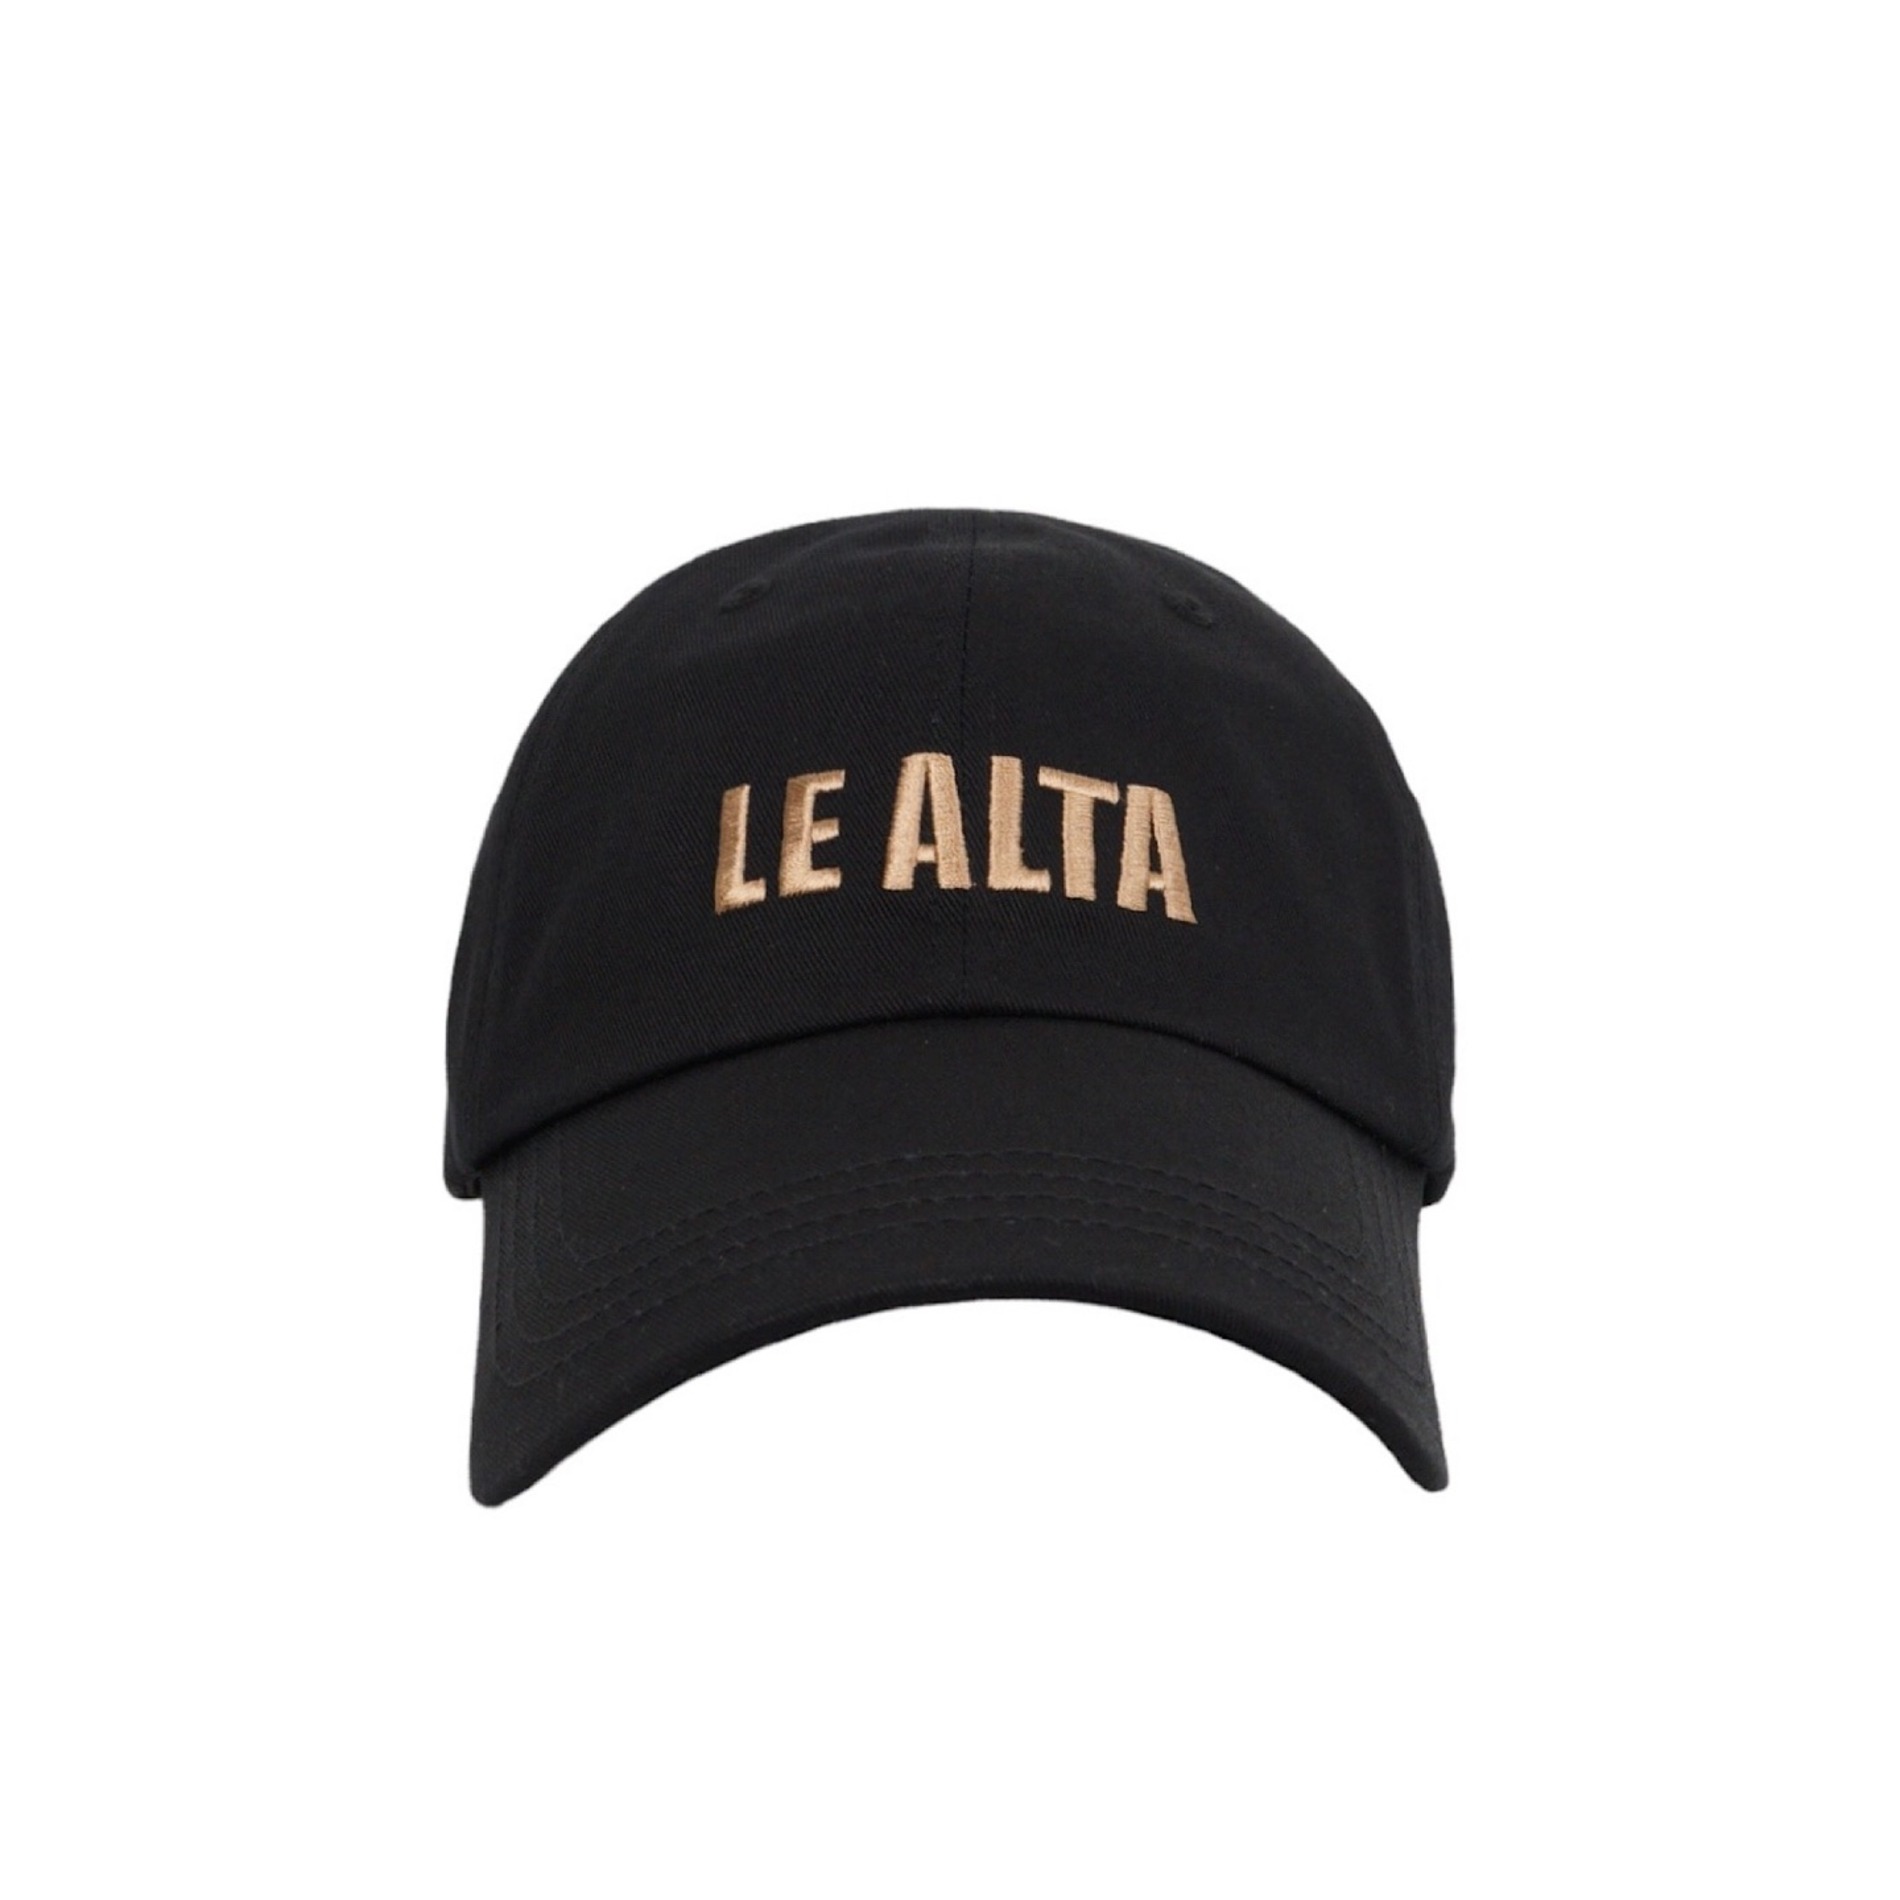 LE ALTA LOGO BALL CAP  BLACK  BEIGE